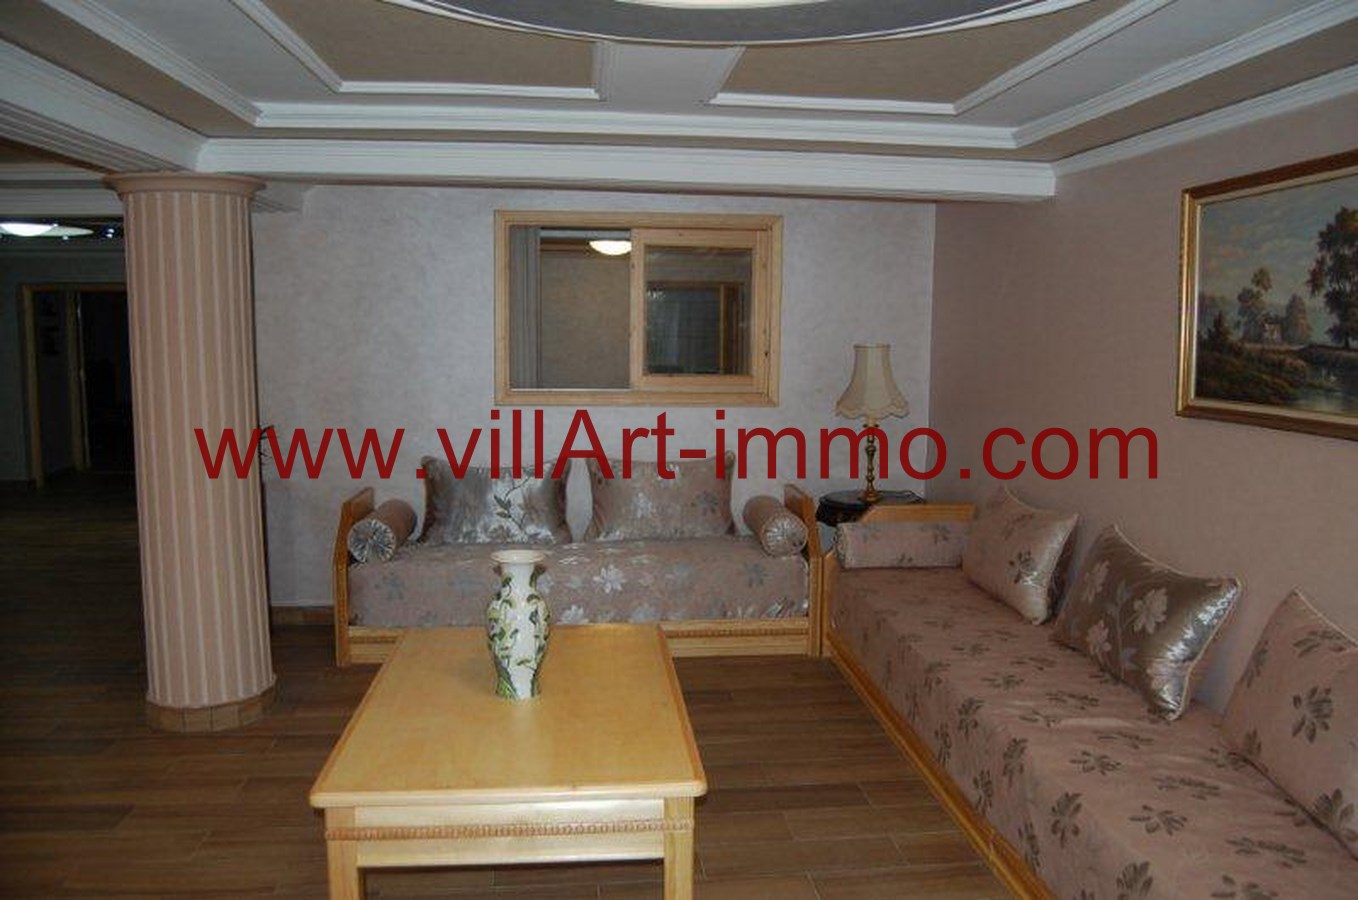 2-Location-Appartement-Tanger-Salon-L741-Villart immo